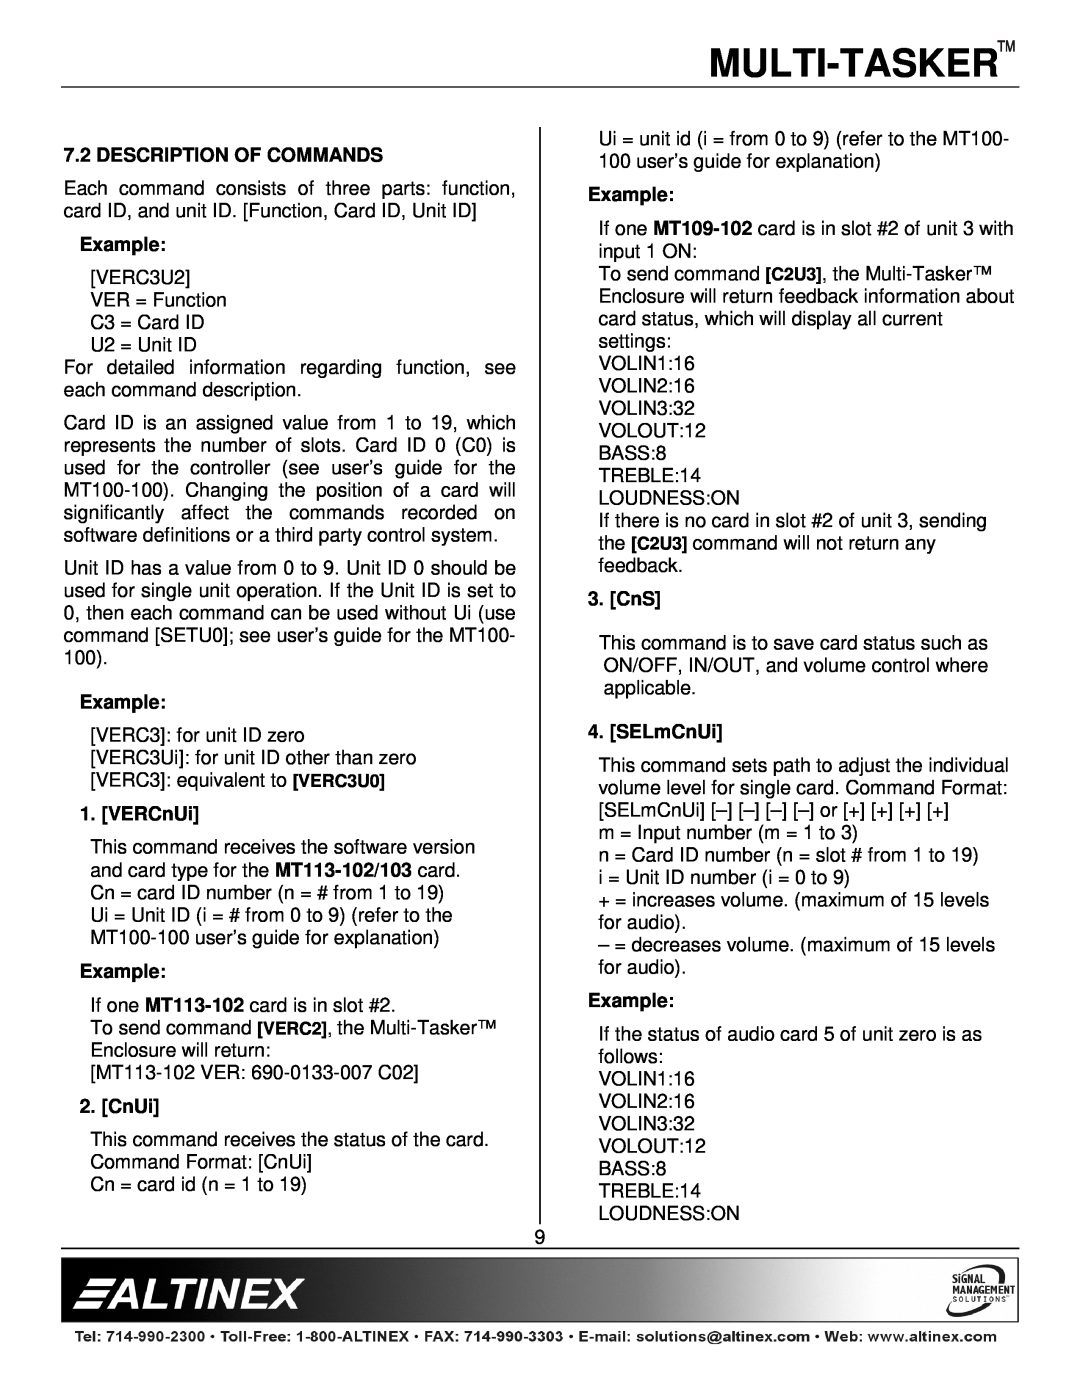 Altinex MT113-102/103 manual Multi-Tasker, Description Of Commands 